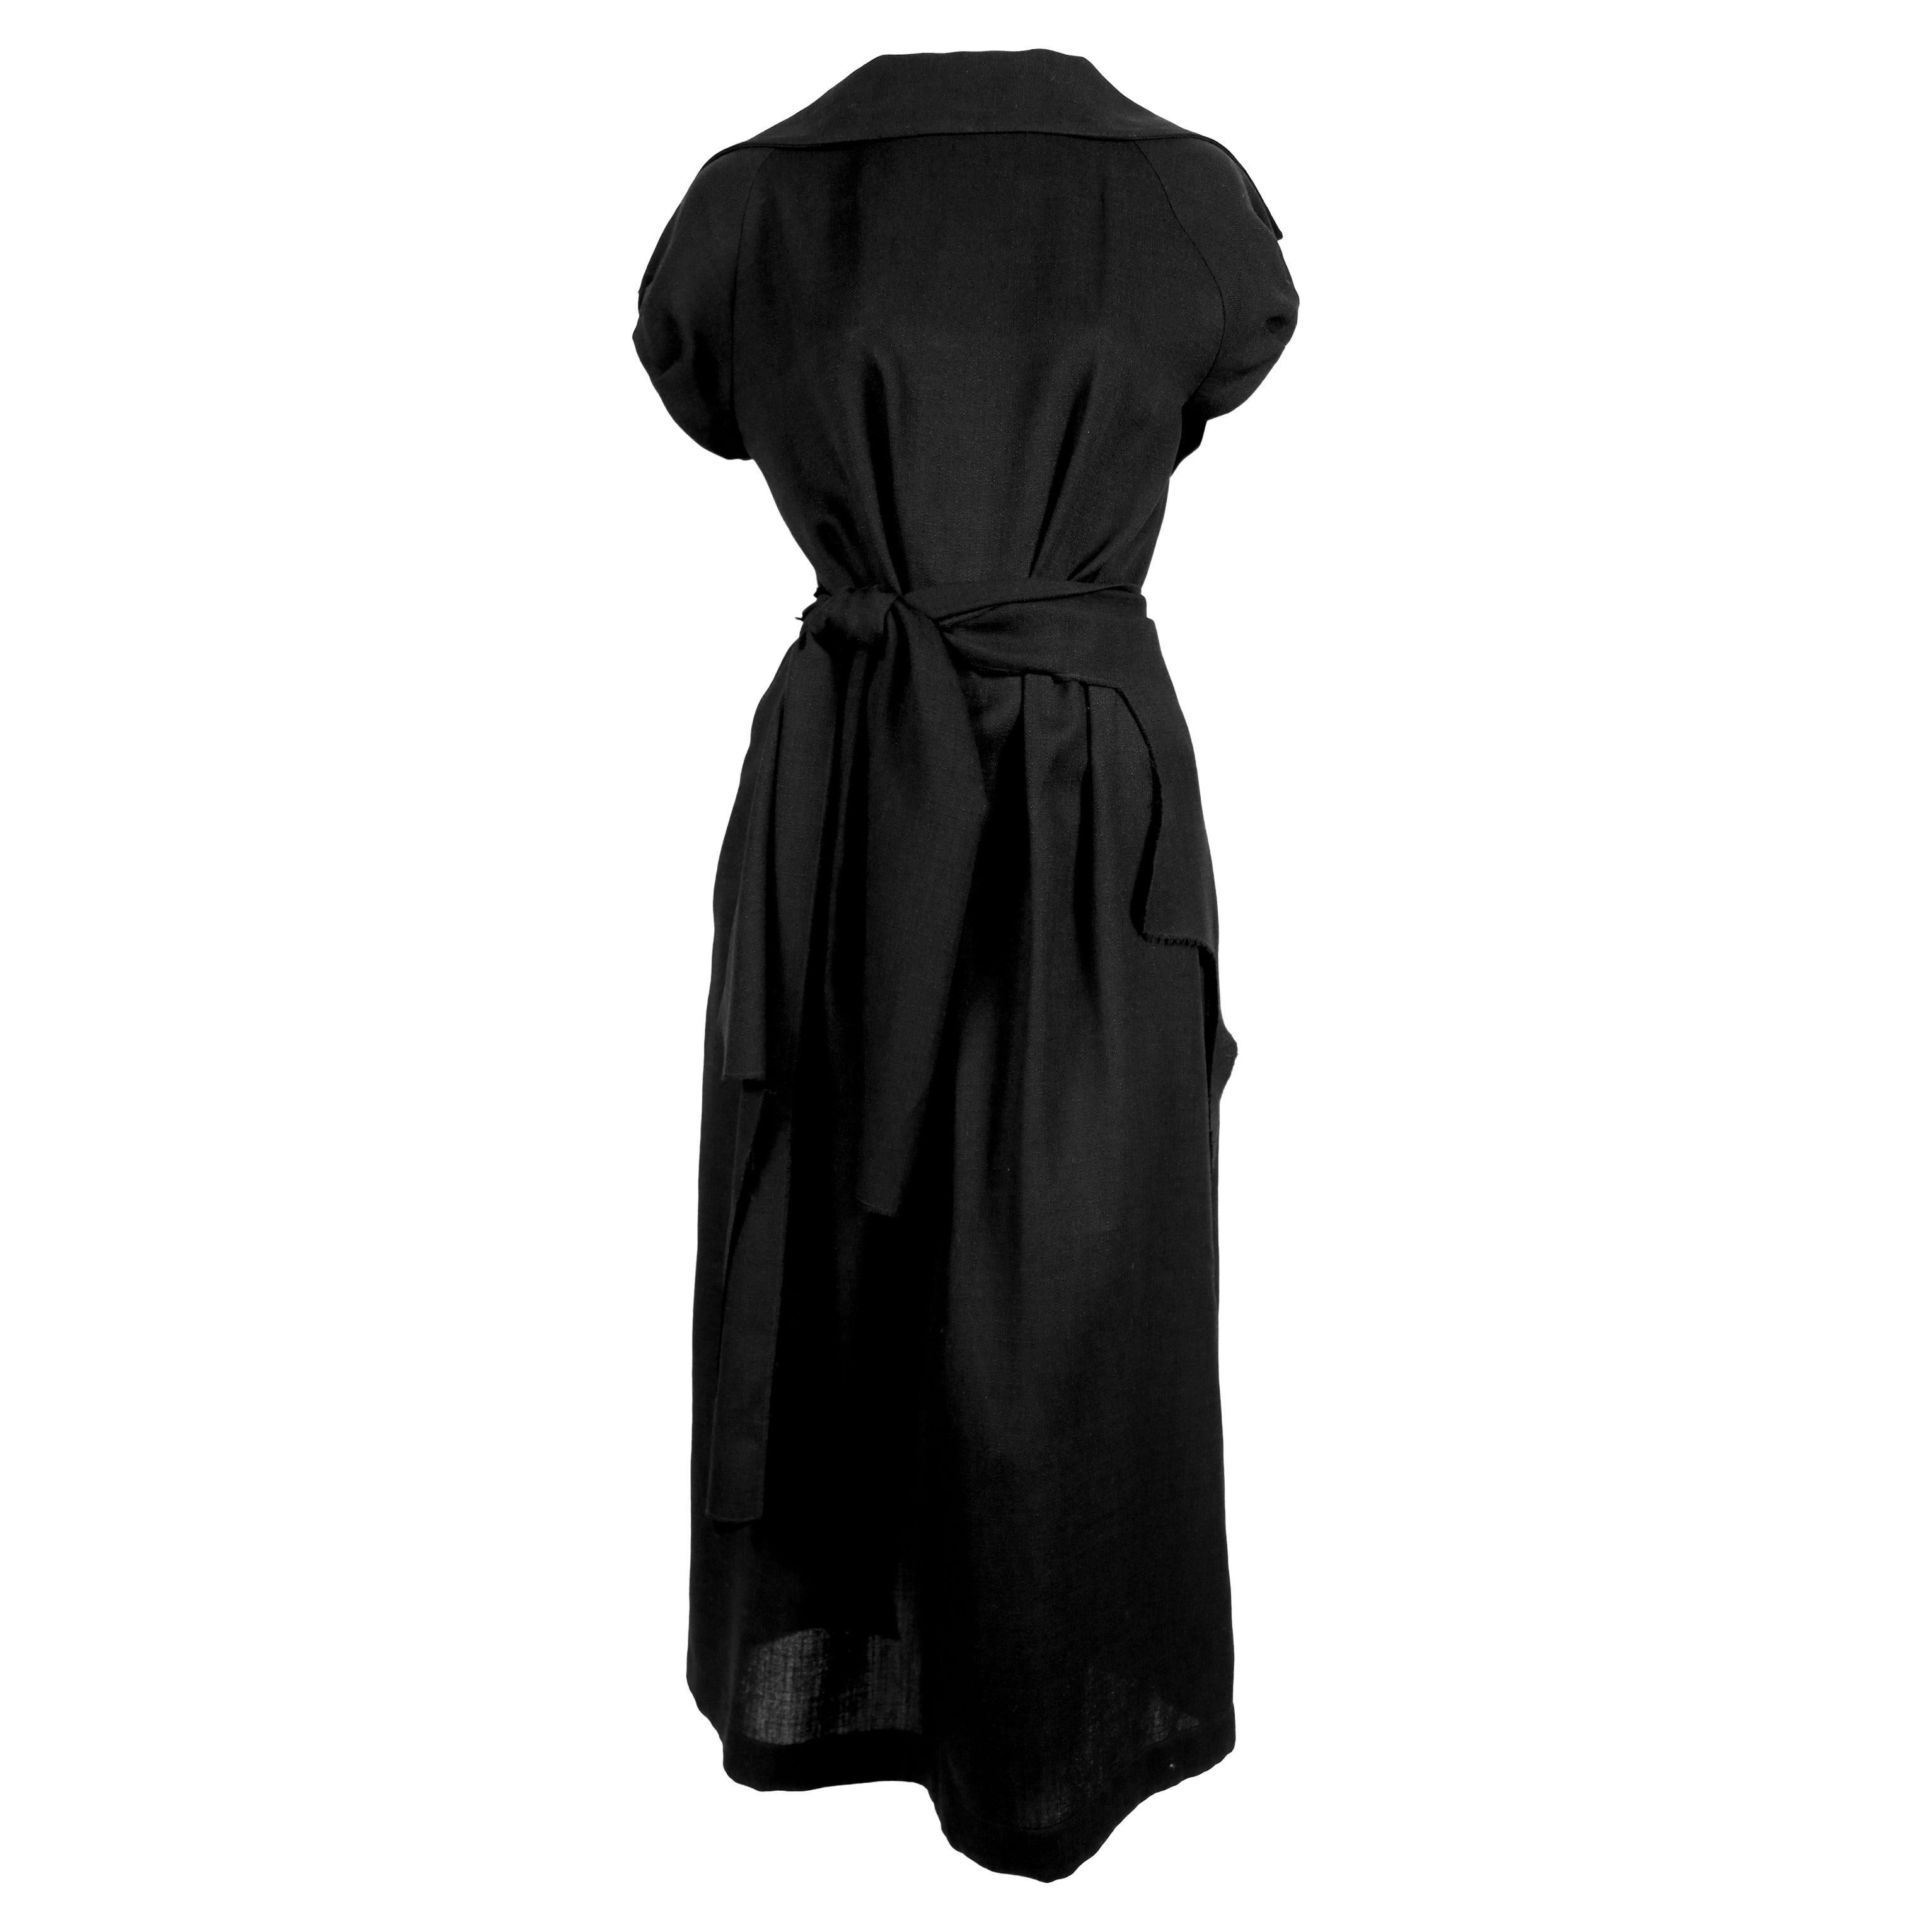 LOEWE black asymmetrical runway dress with raw edges